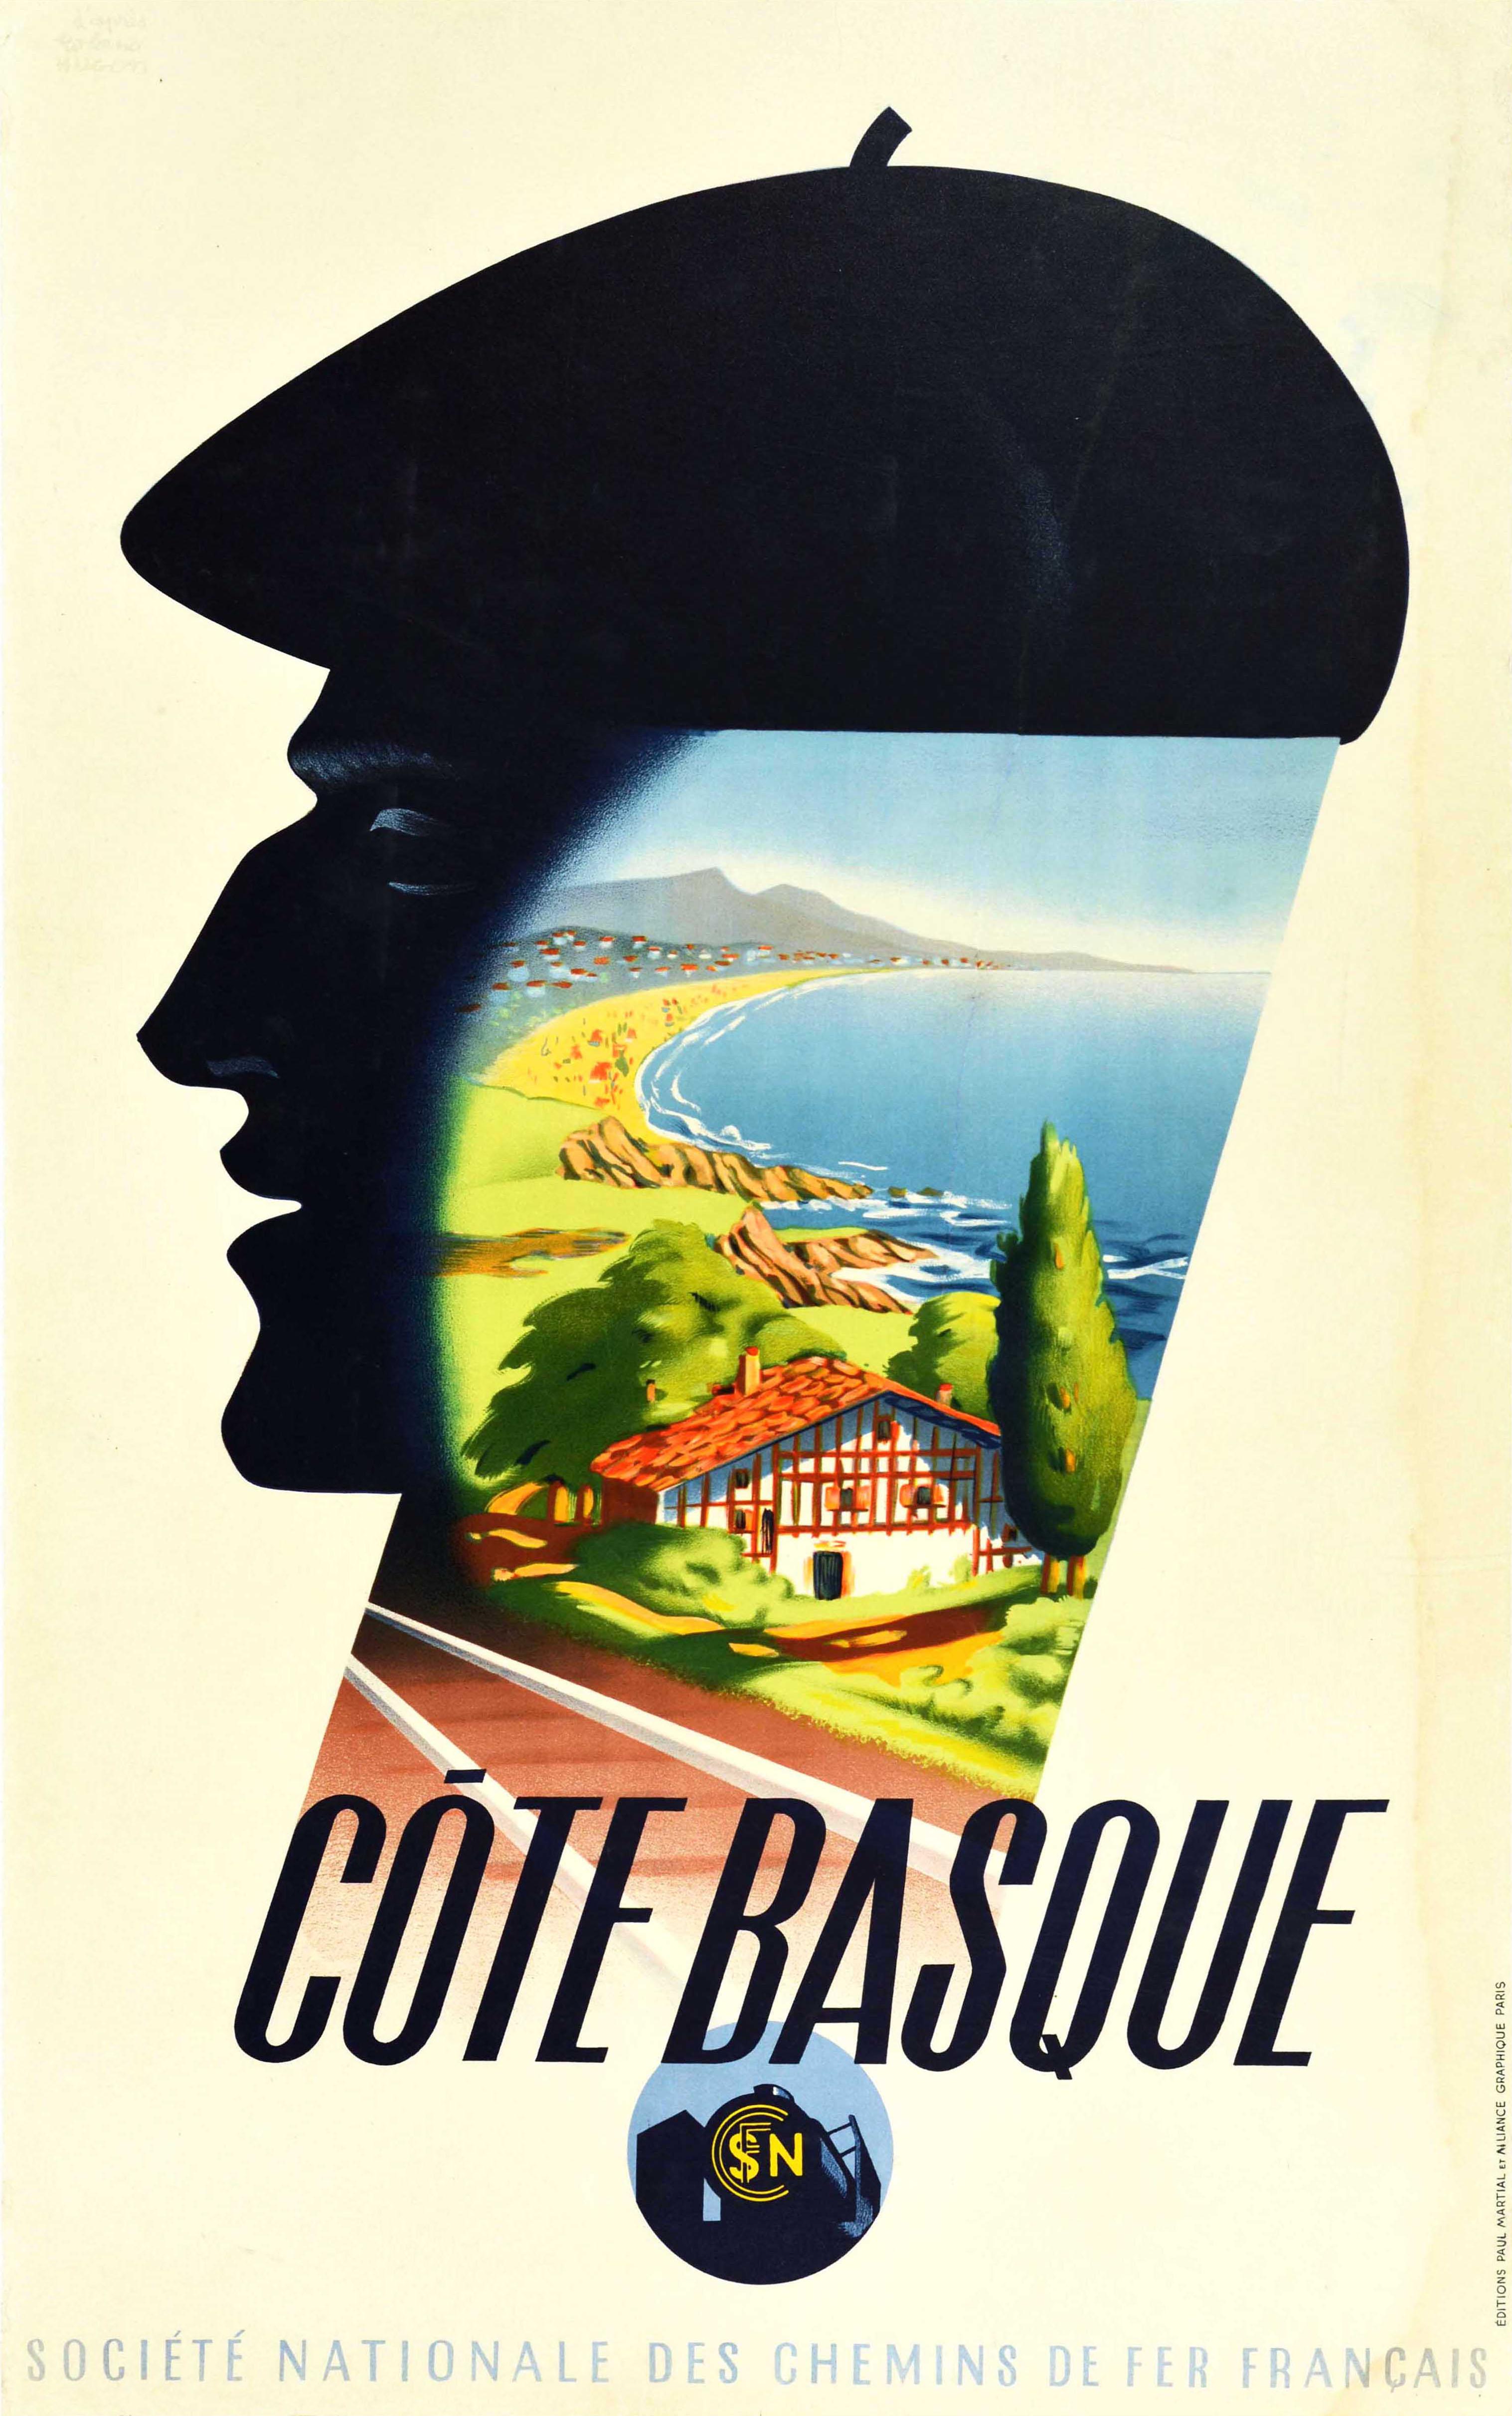 Unknown Print - Original Vintage Poster For Cote Basque Coast SNCF French Railway Travel Design